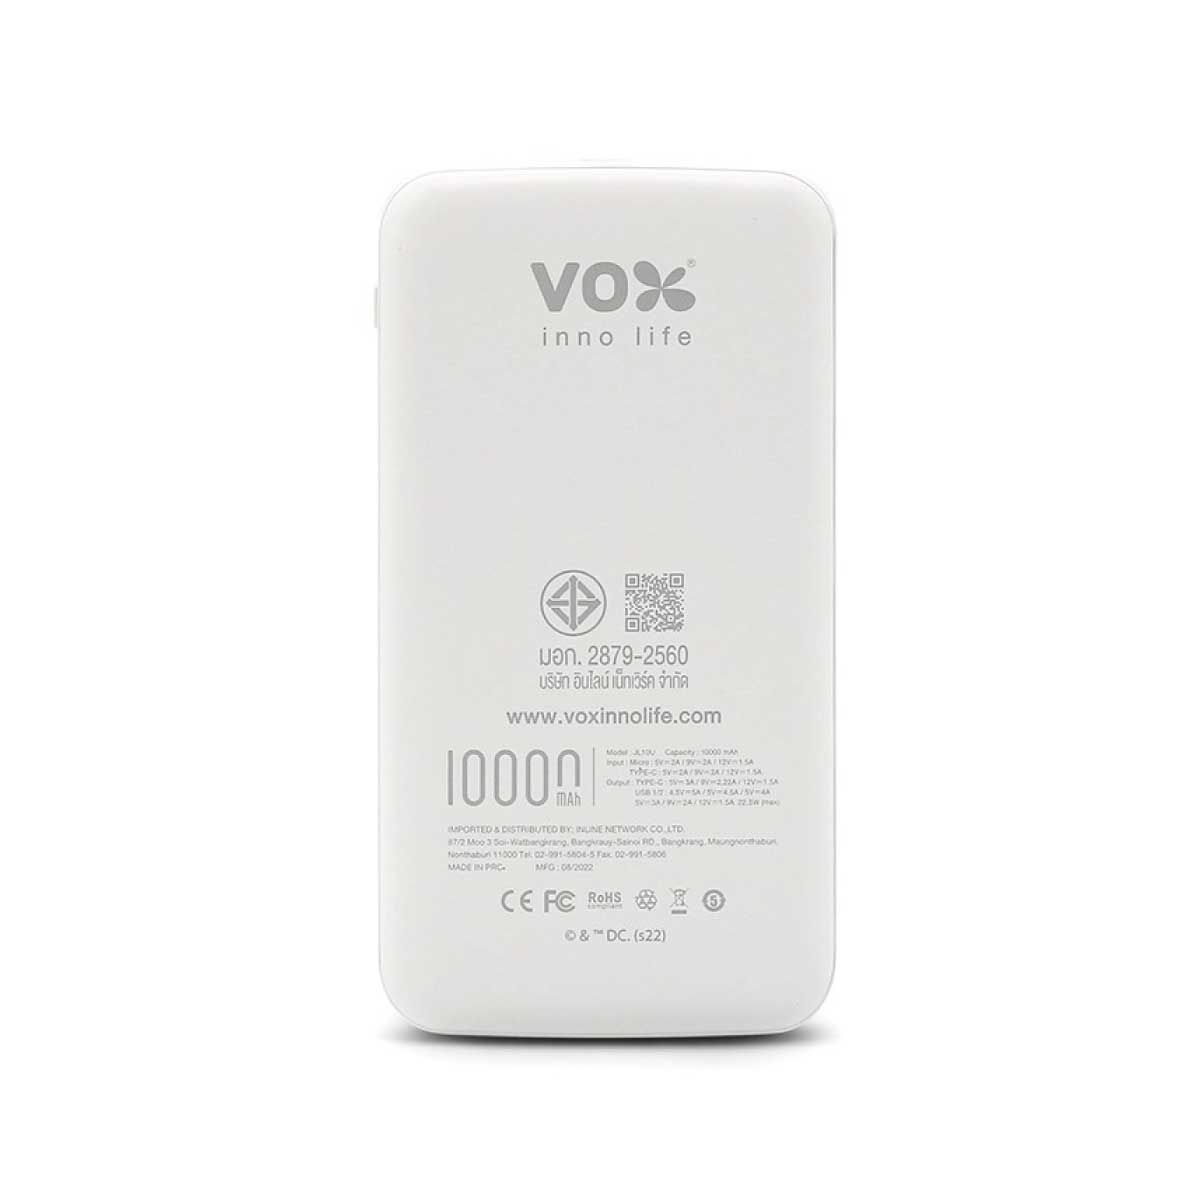 VOX แบตเตอรี่สำรอง 10000 mAh ซุปเปอร์แมน แบบ 2 สีขาว